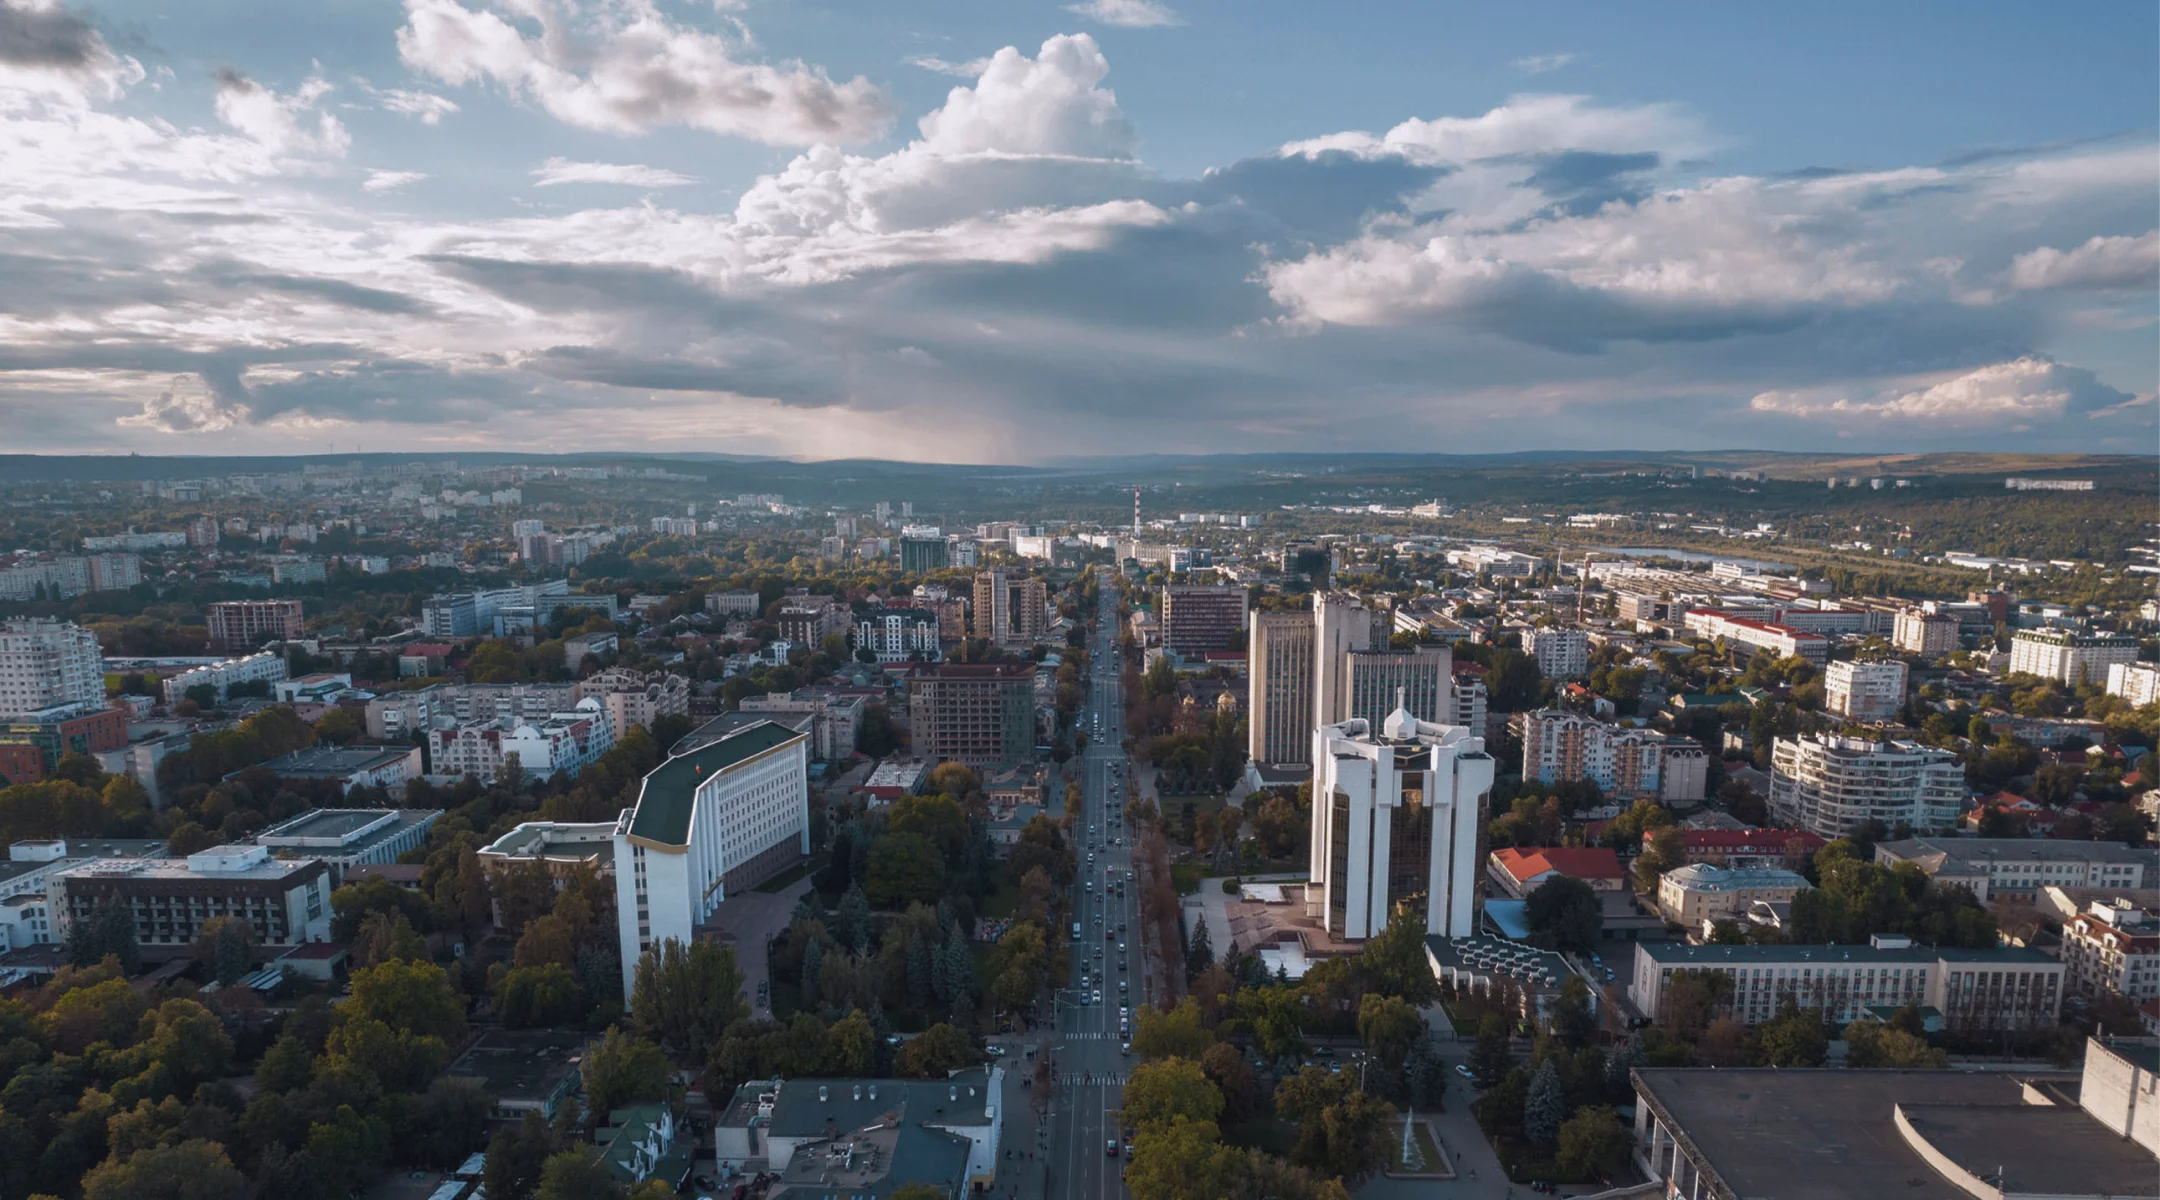 Moldova, Chisinau